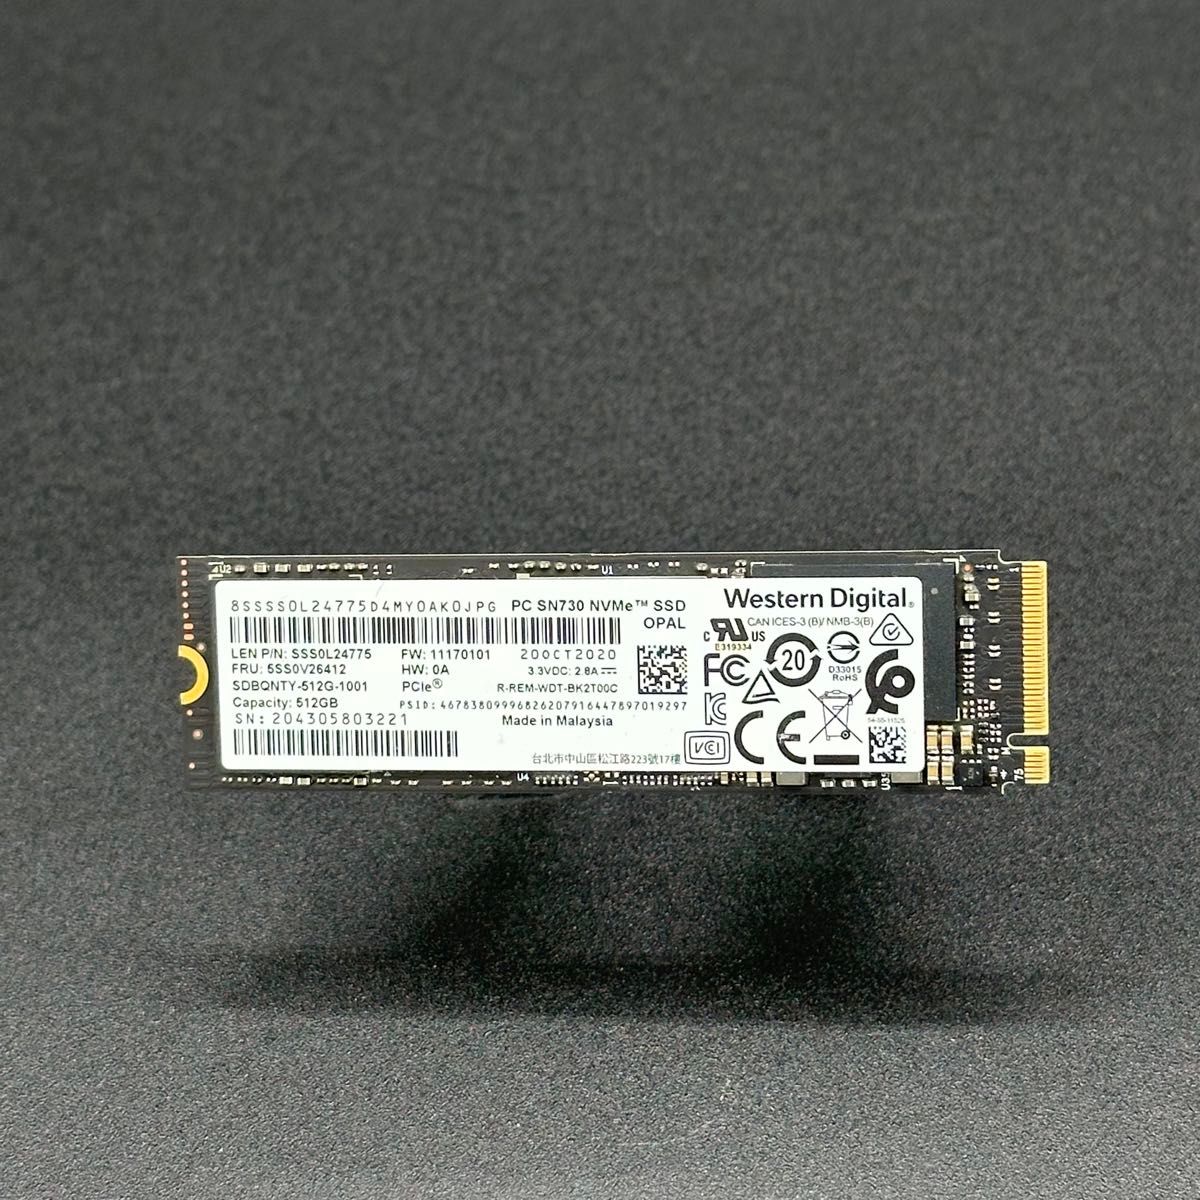 WD Western Digital 512GB SSD PC SN730 NVMe PCIe Gen3 x4 M.2 2280